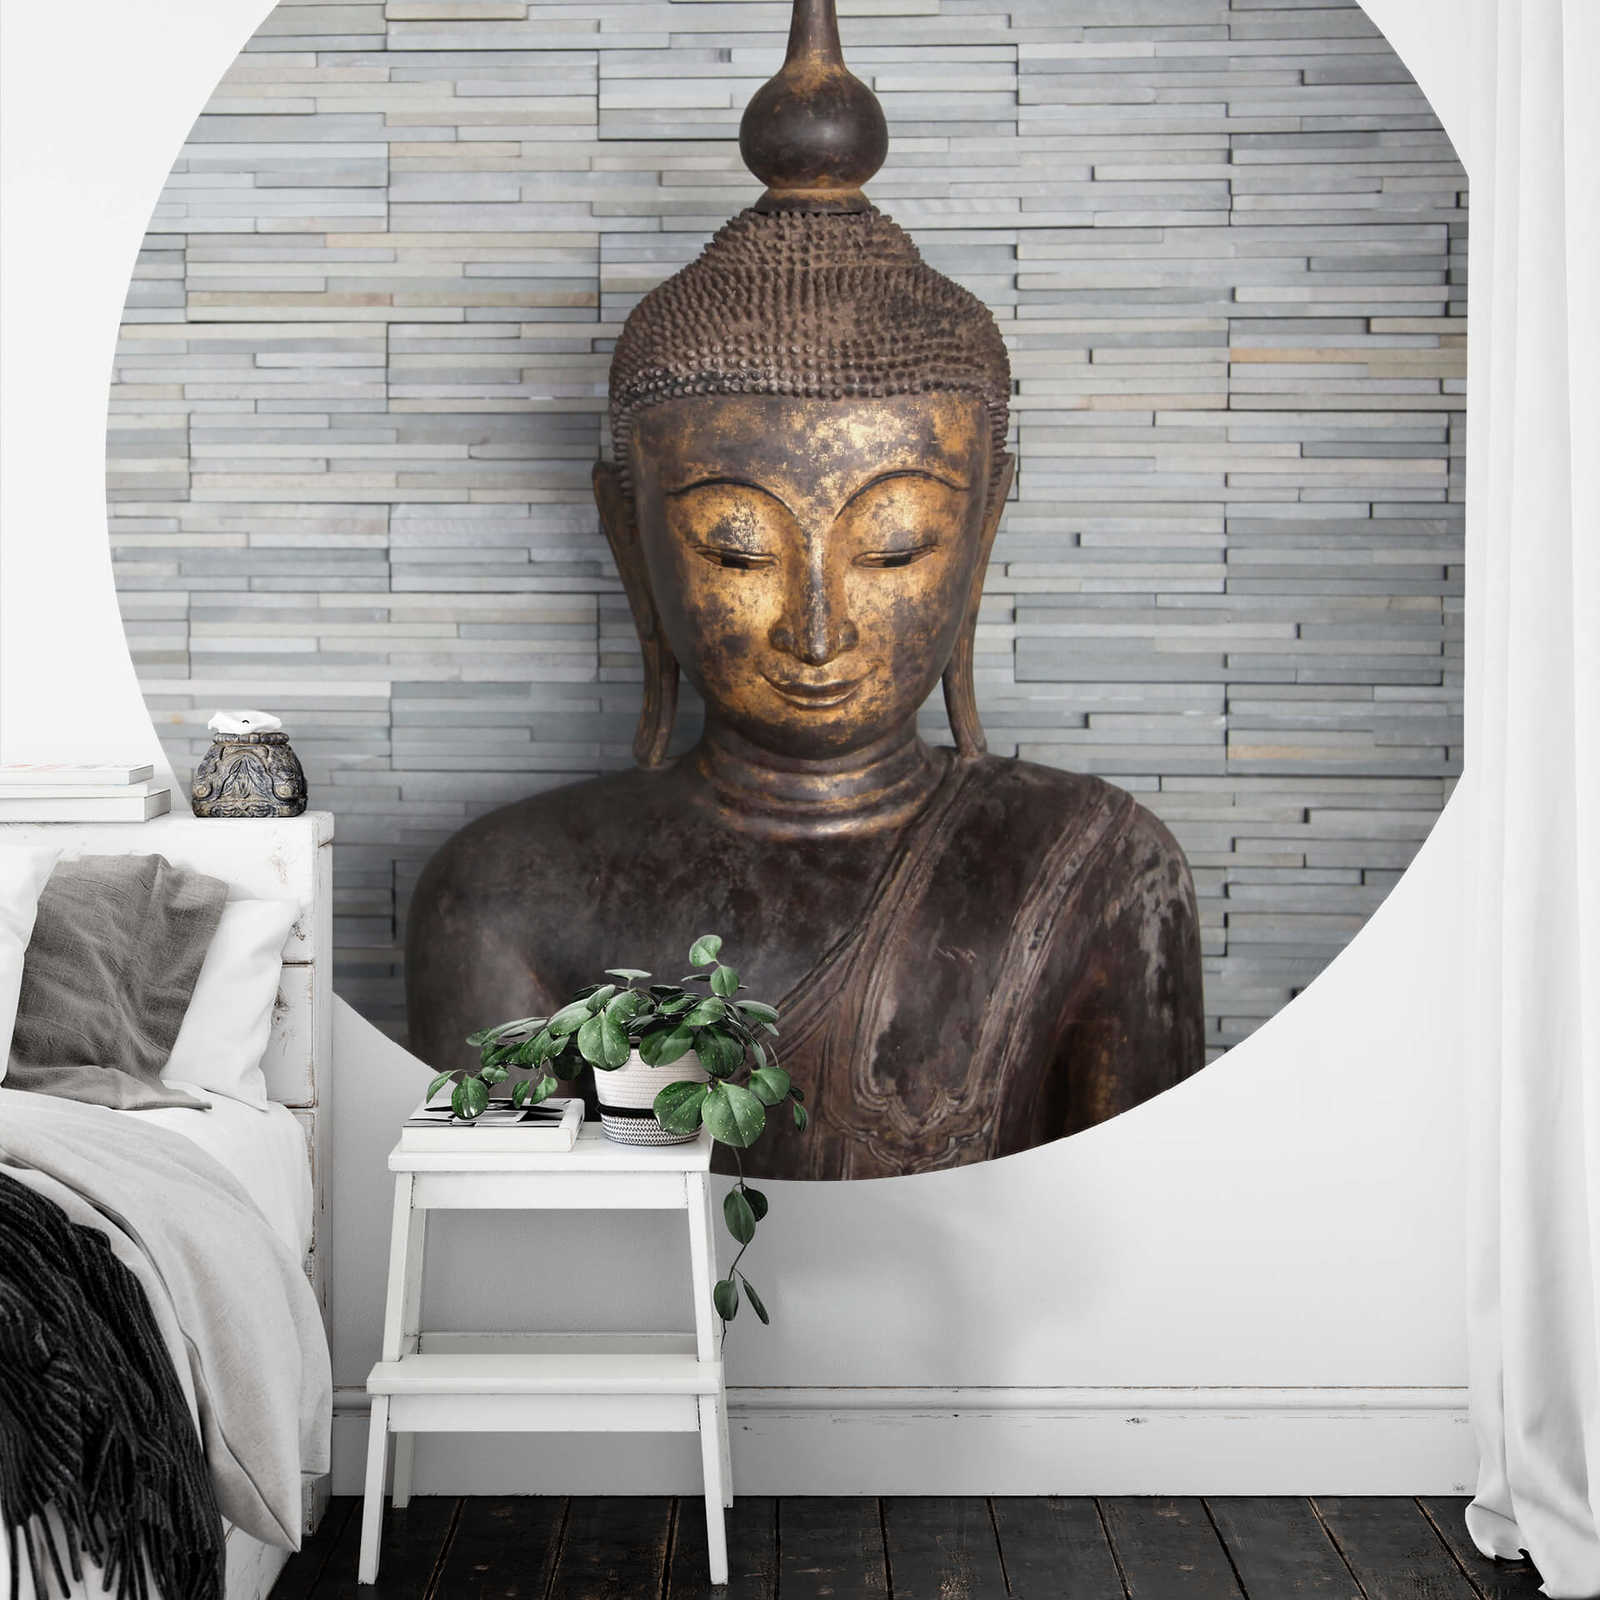             Fotomurali Thai Buddha - Marrone, grigio
        